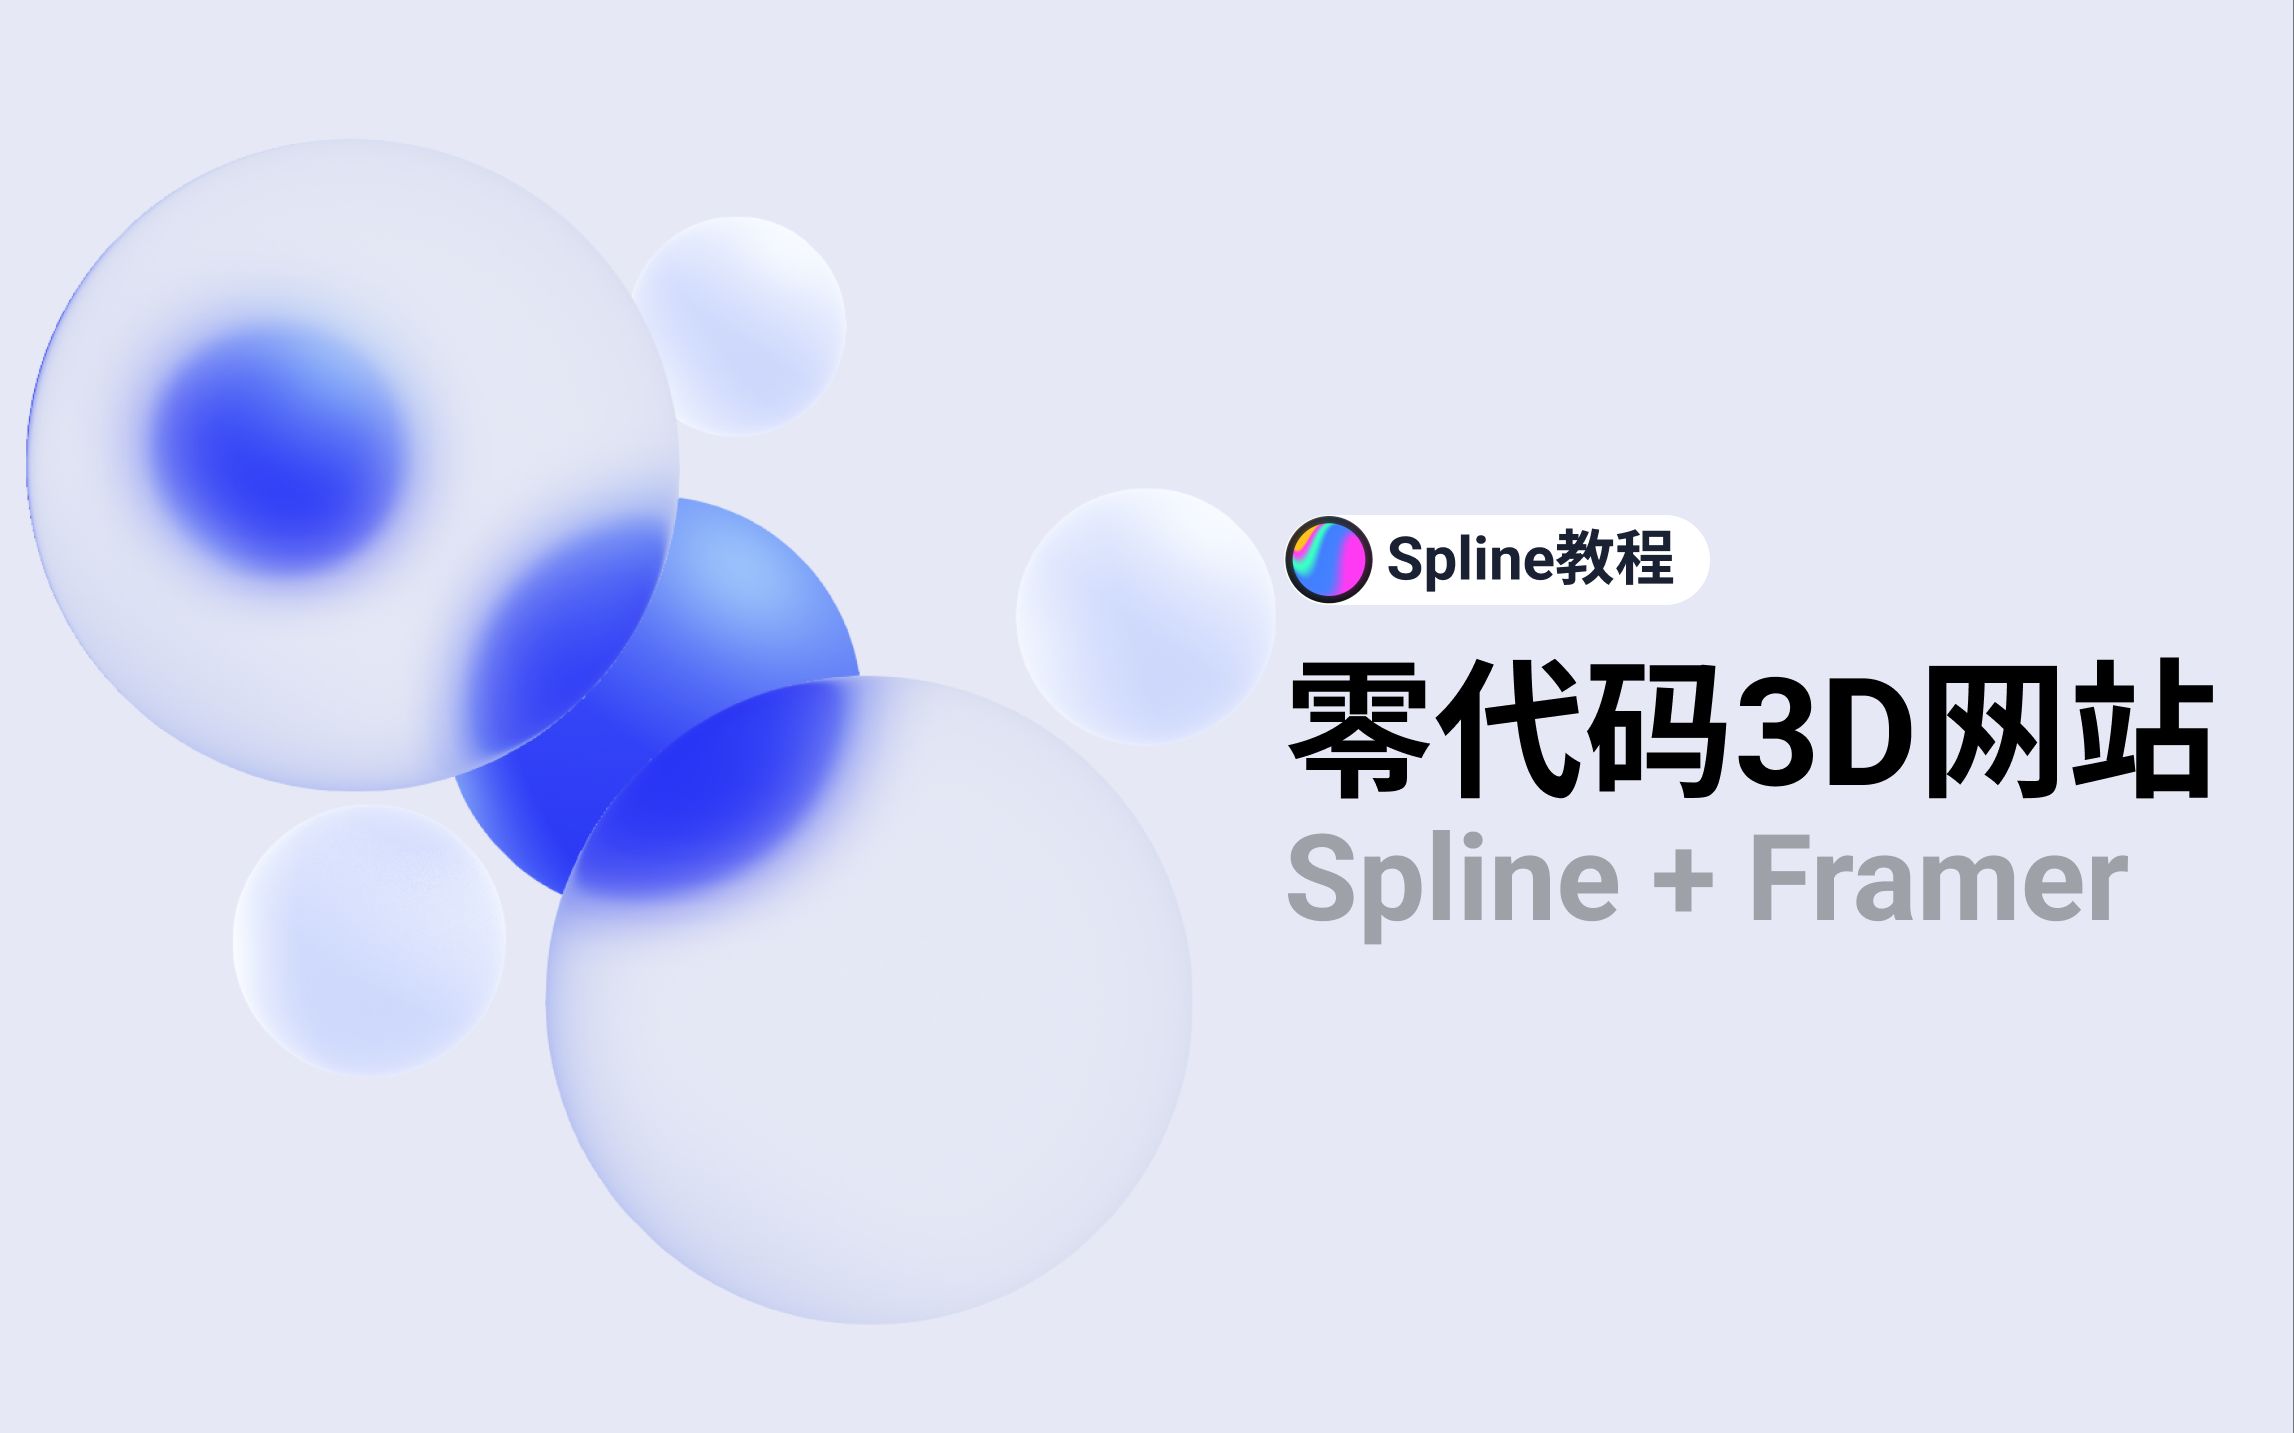 Spline教程 | 教你零代码上线一个3D网站，Spline+Framer双厨狂喜（内含上线网站demo）